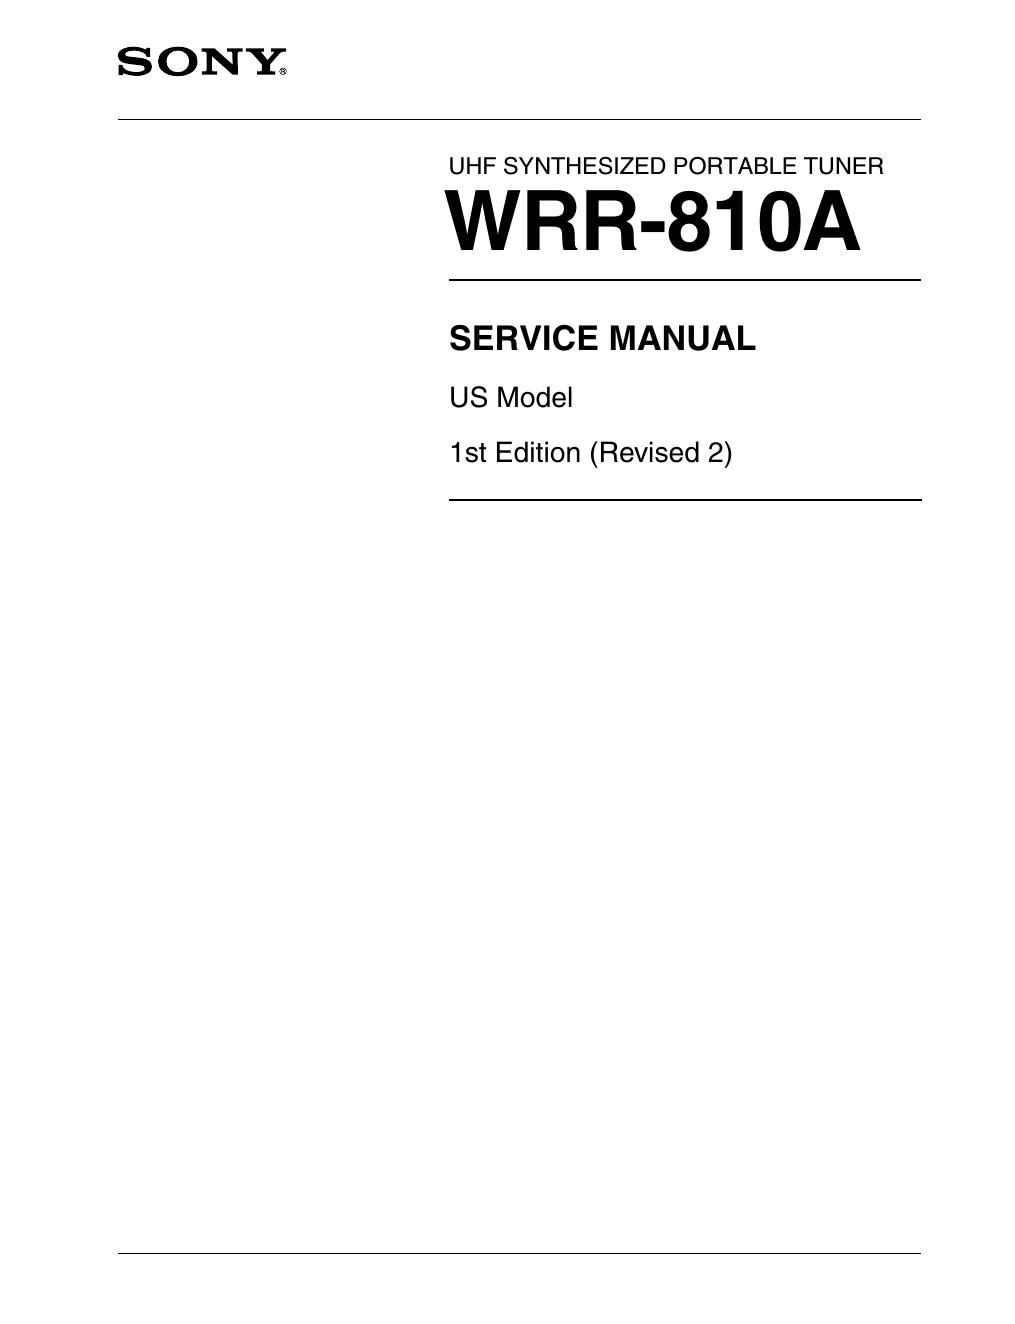 sony wrr 810 a service manual